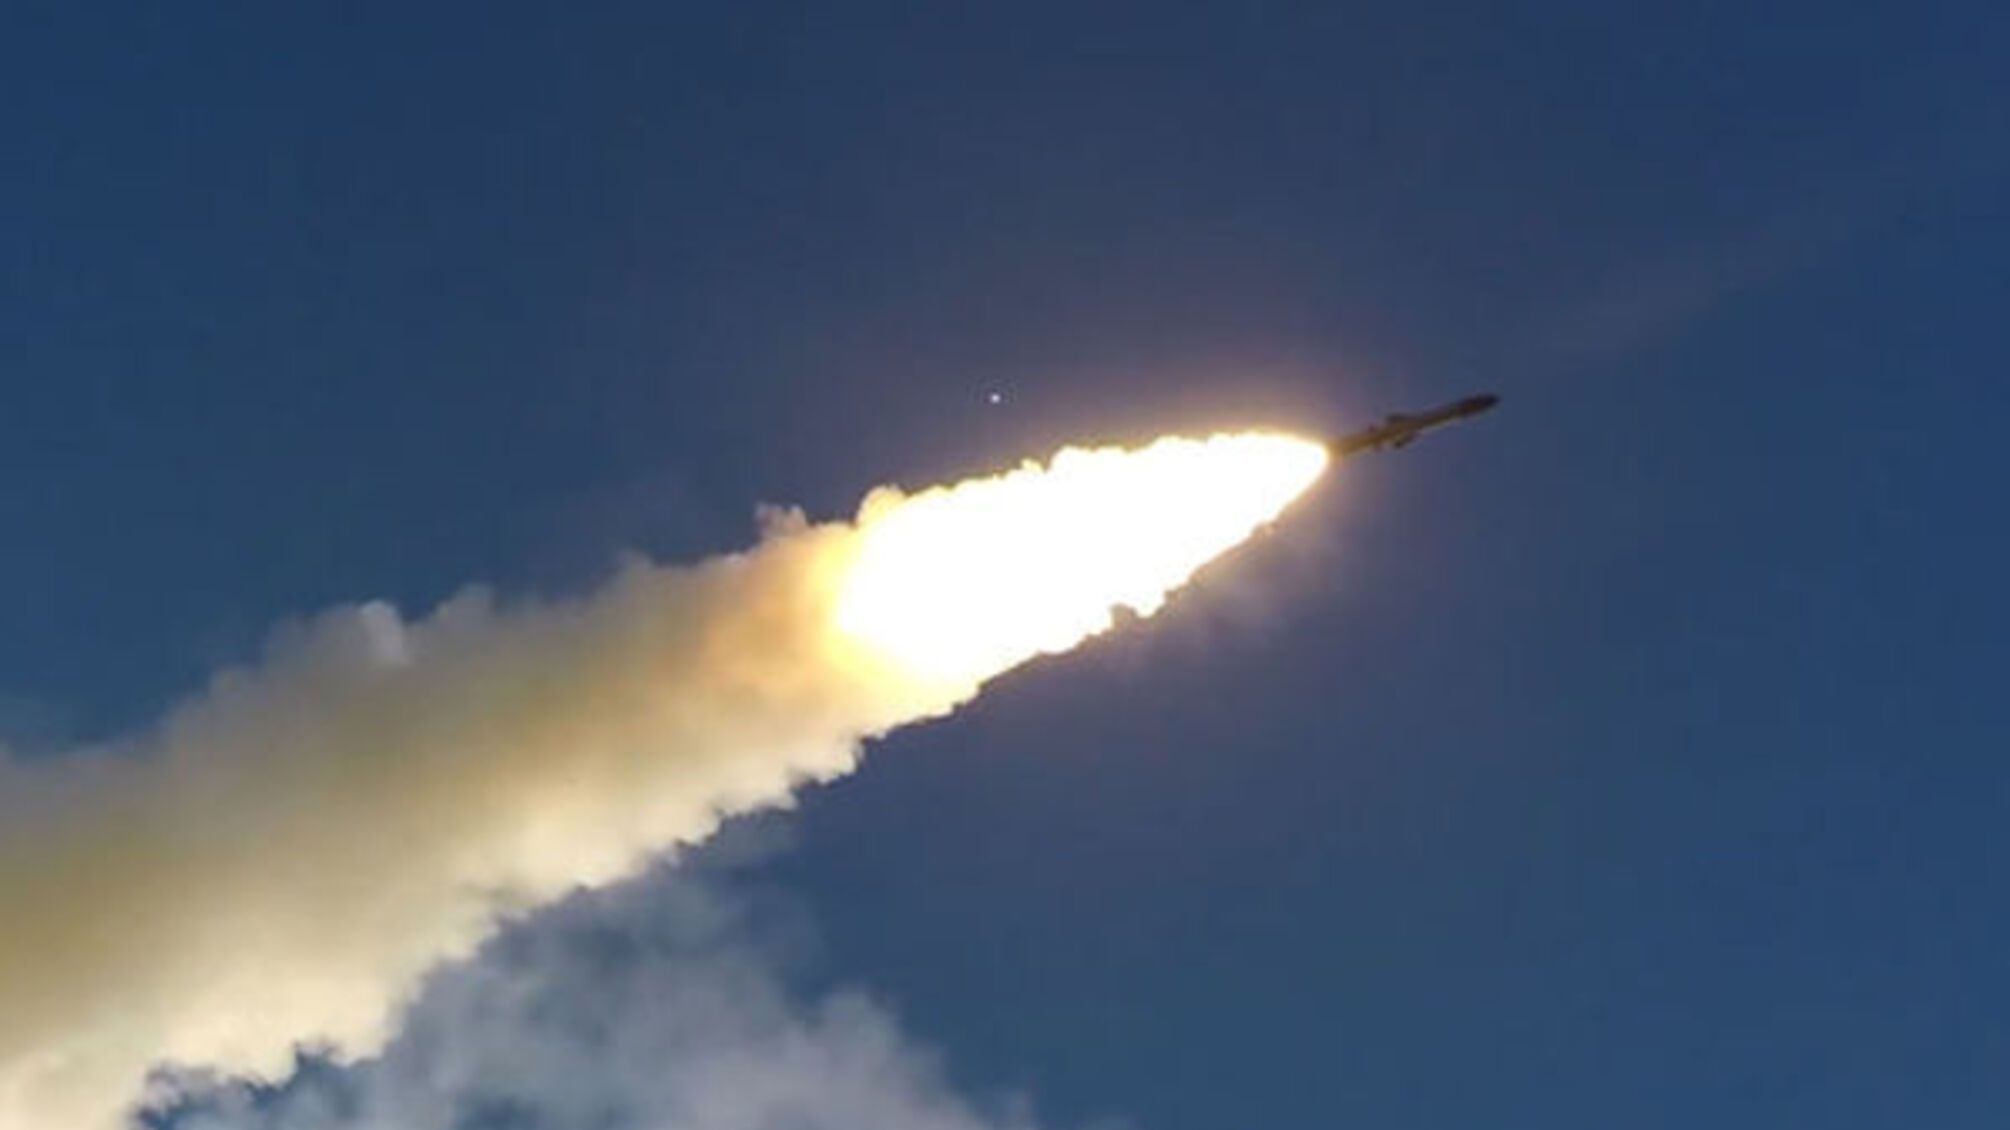 ОВА: Одесщина снова атакована двумя ракетами типа 'Оникс', сработала ПВО